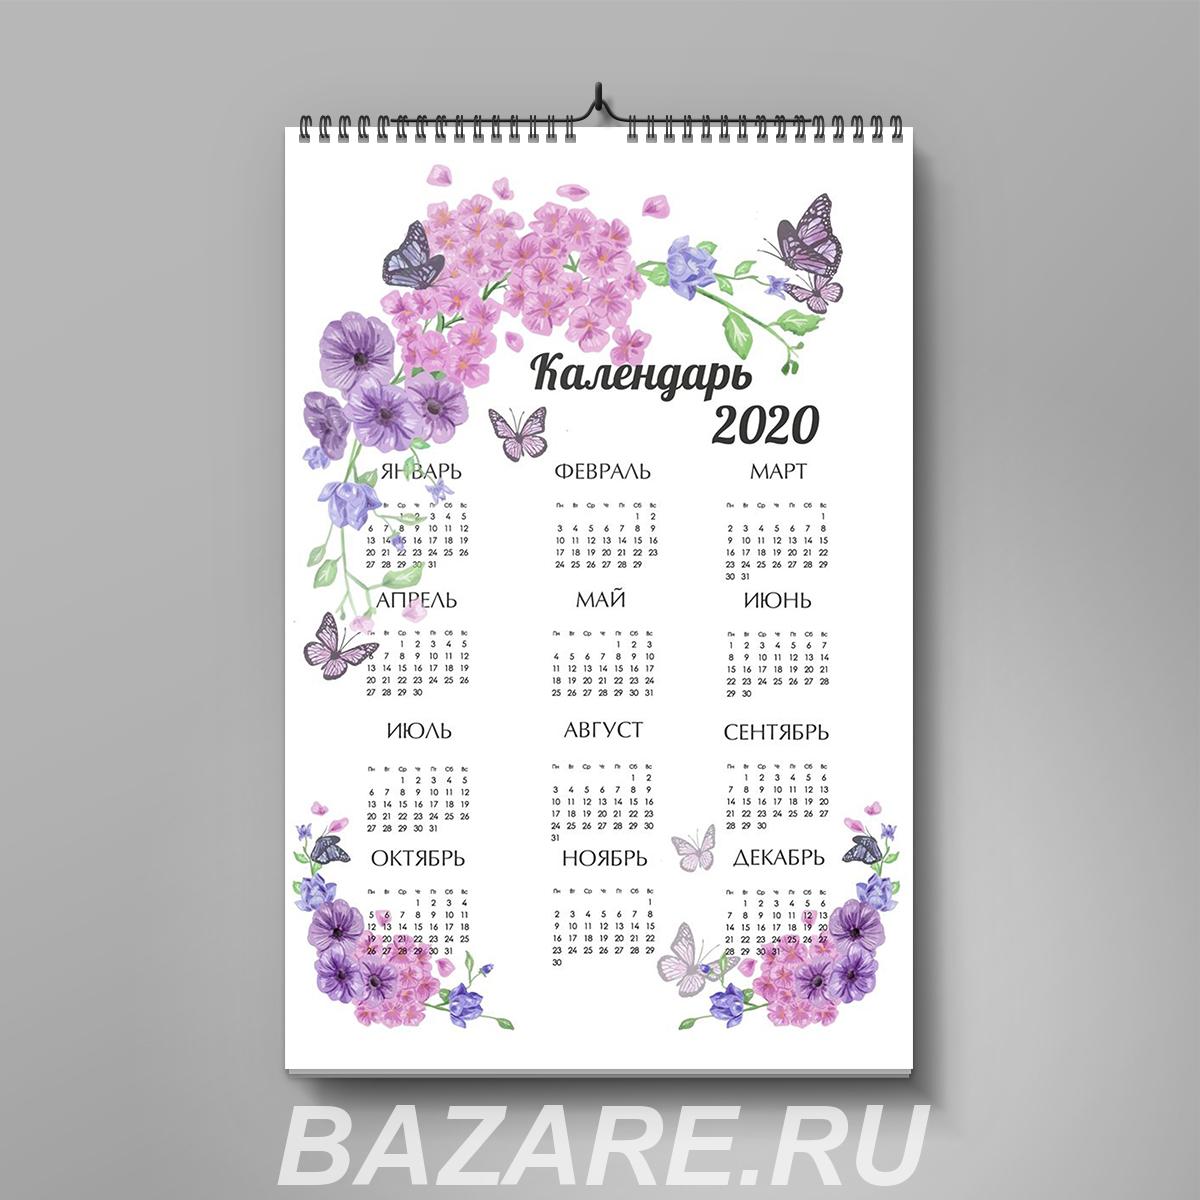 Календари на 2021 год в наличие и под заказ, Сургут